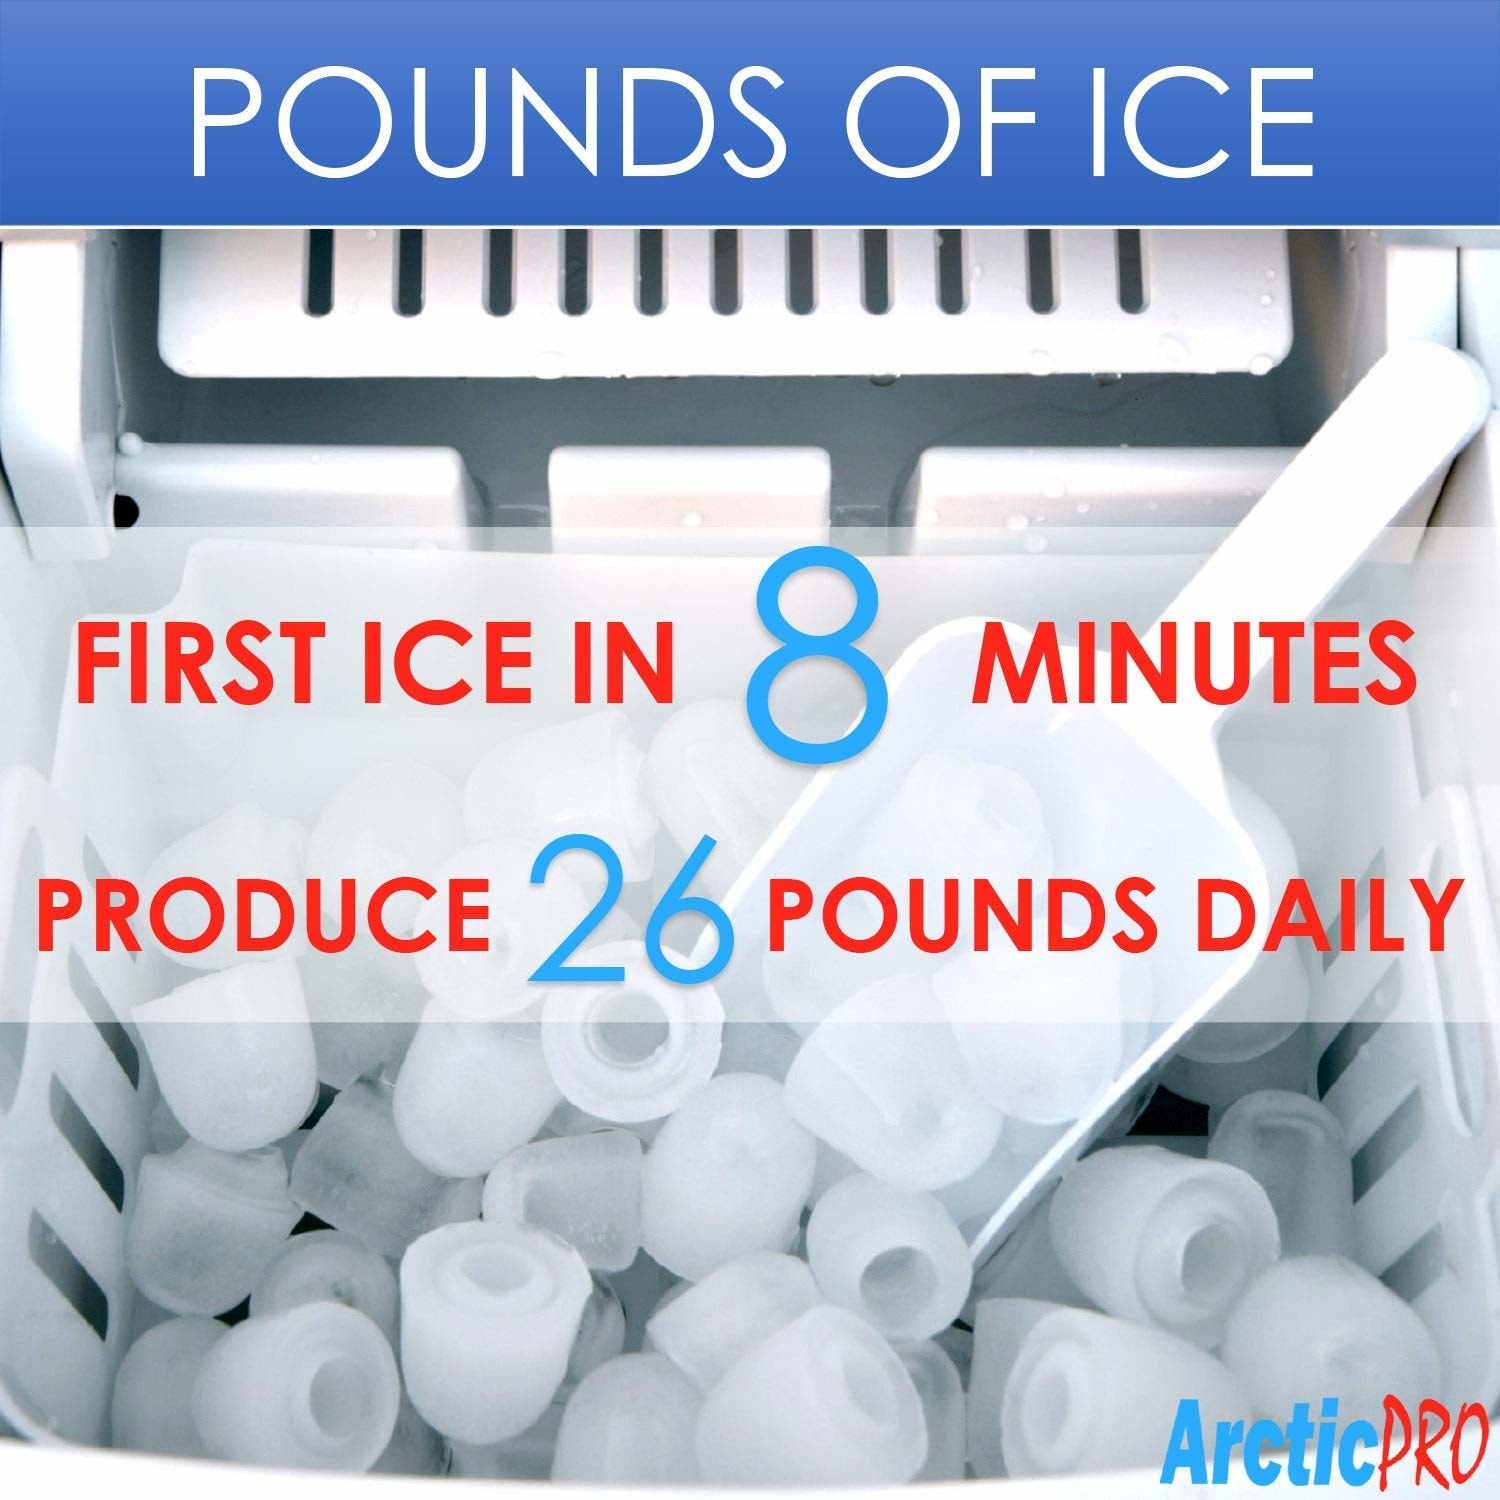 Arctic-Pro Portable Digital Quick Ice Maker Machine Silver Makes 2 Ice Sizes 